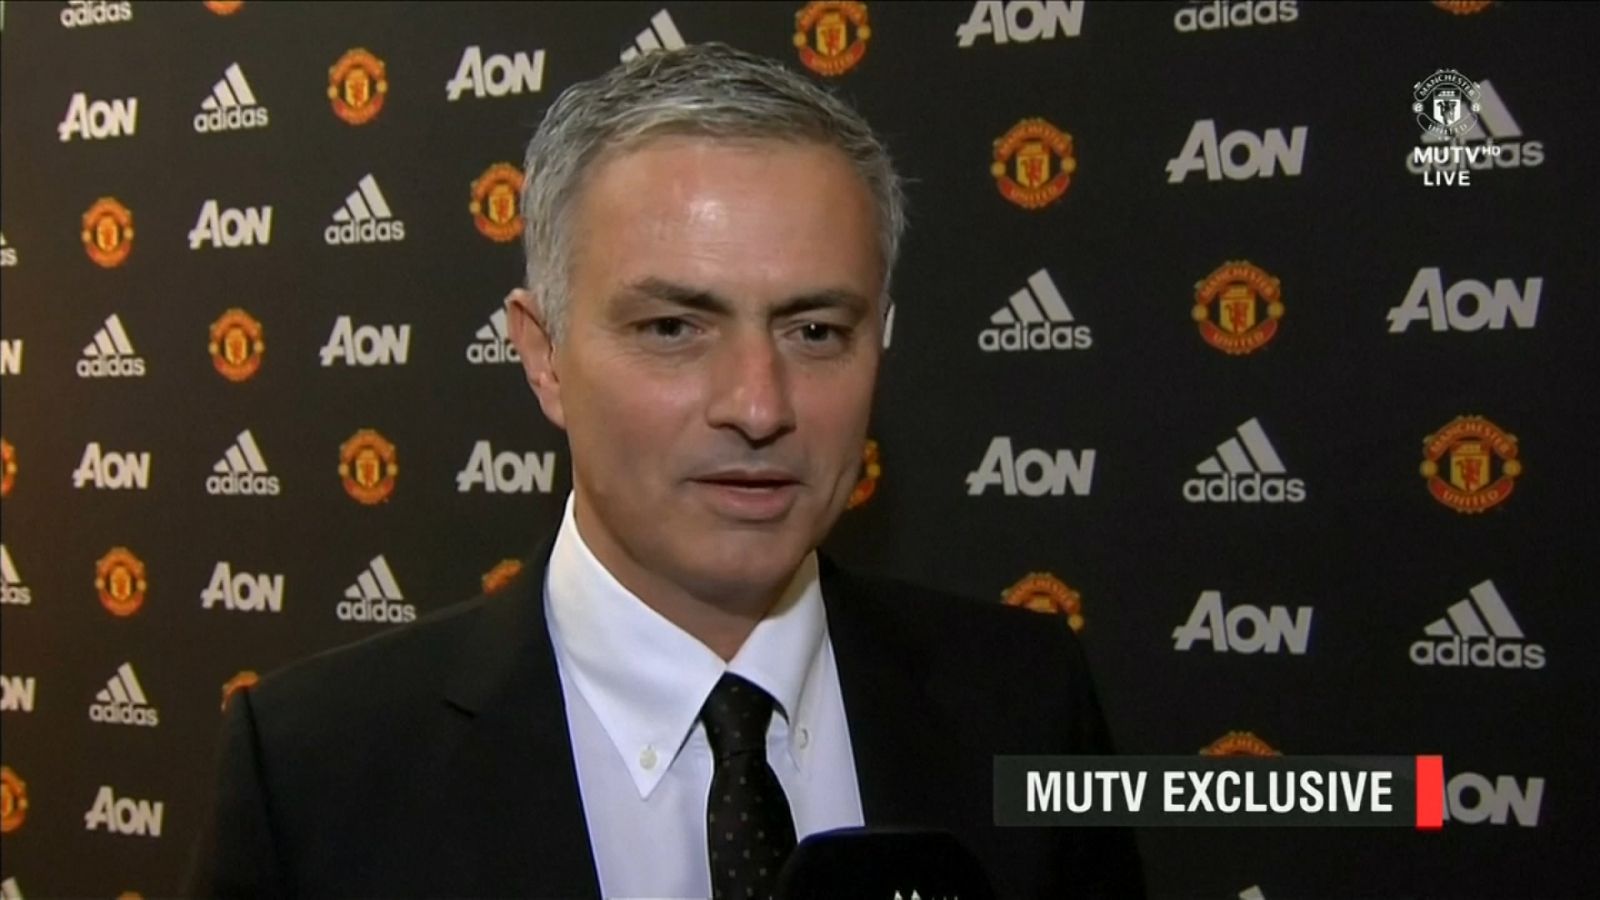 Jose Mourinho Manchester United Official - HD Wallpaper 